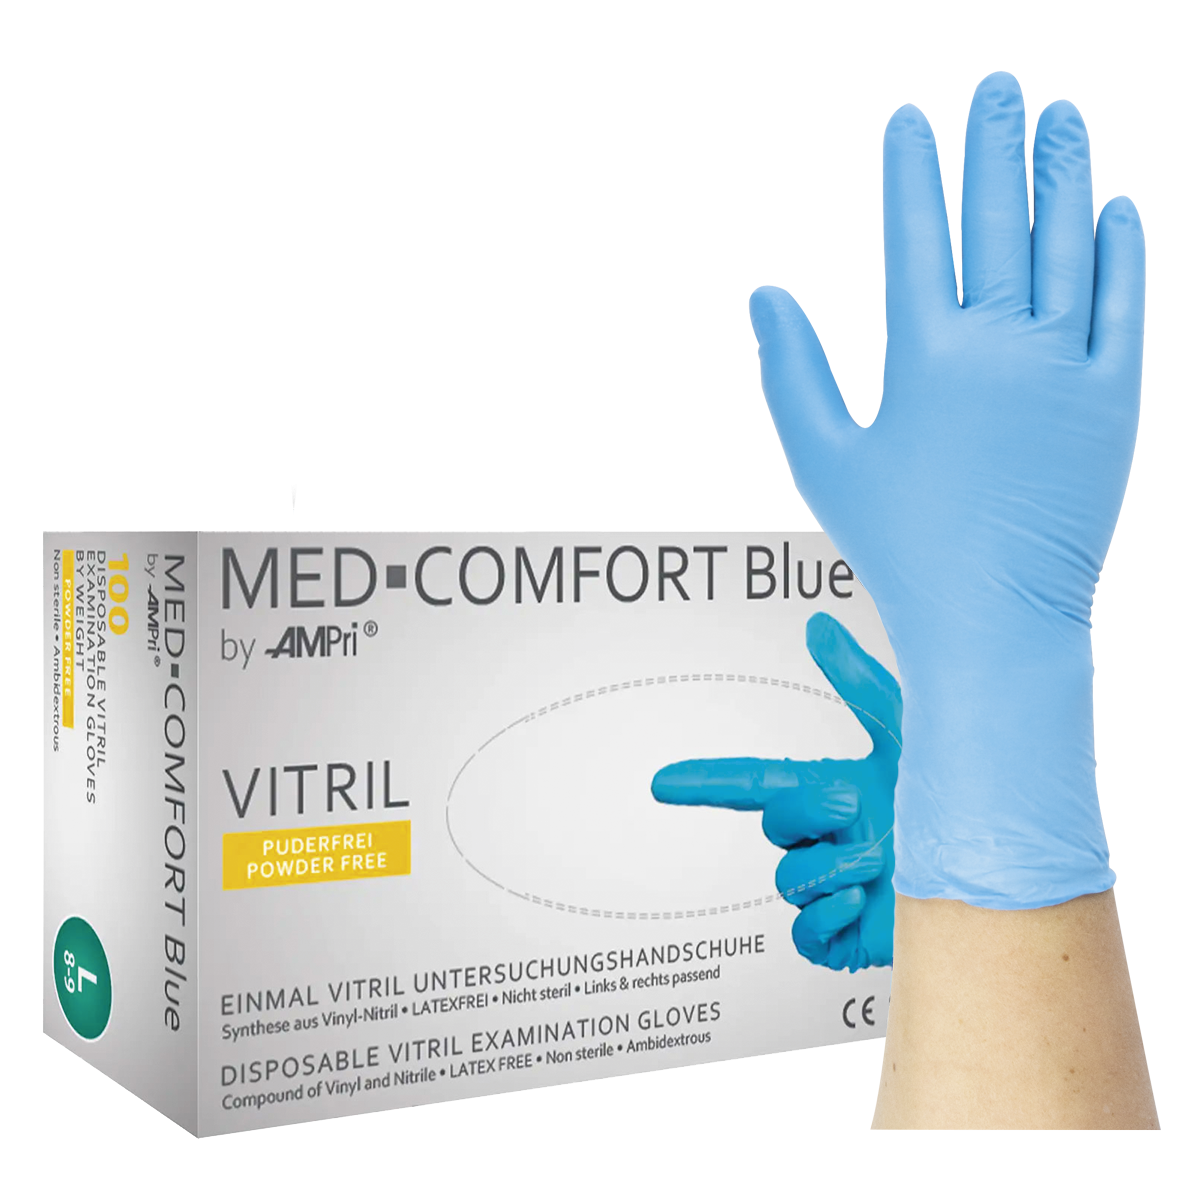 MED-COMFORT Blue Vitril – Vitrilhandschuhe, puderfrei, 100 Stück (01251)